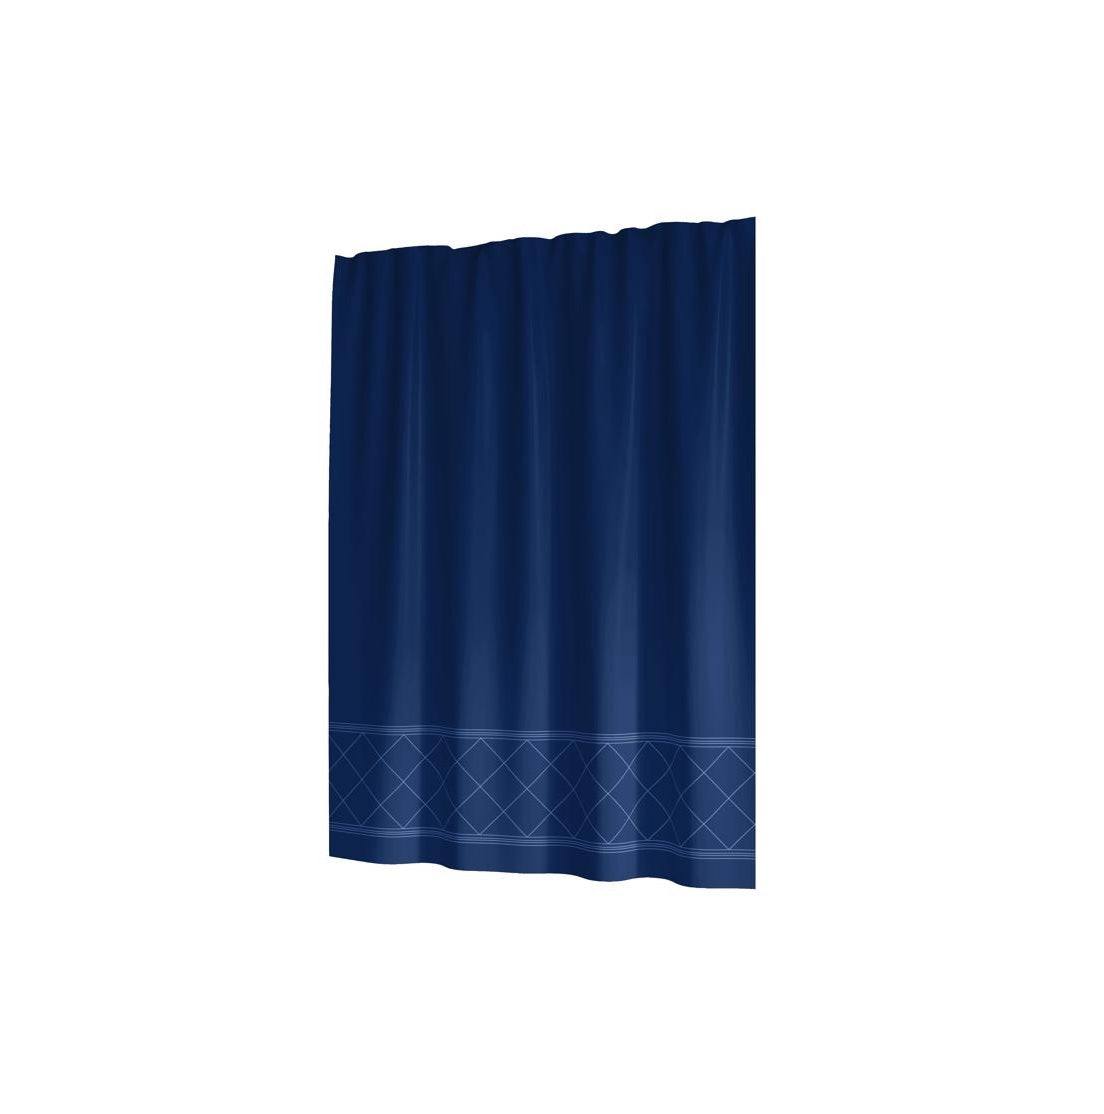 Sttelli RAS-115-NAV Radiance Shower Curtain, Polyester